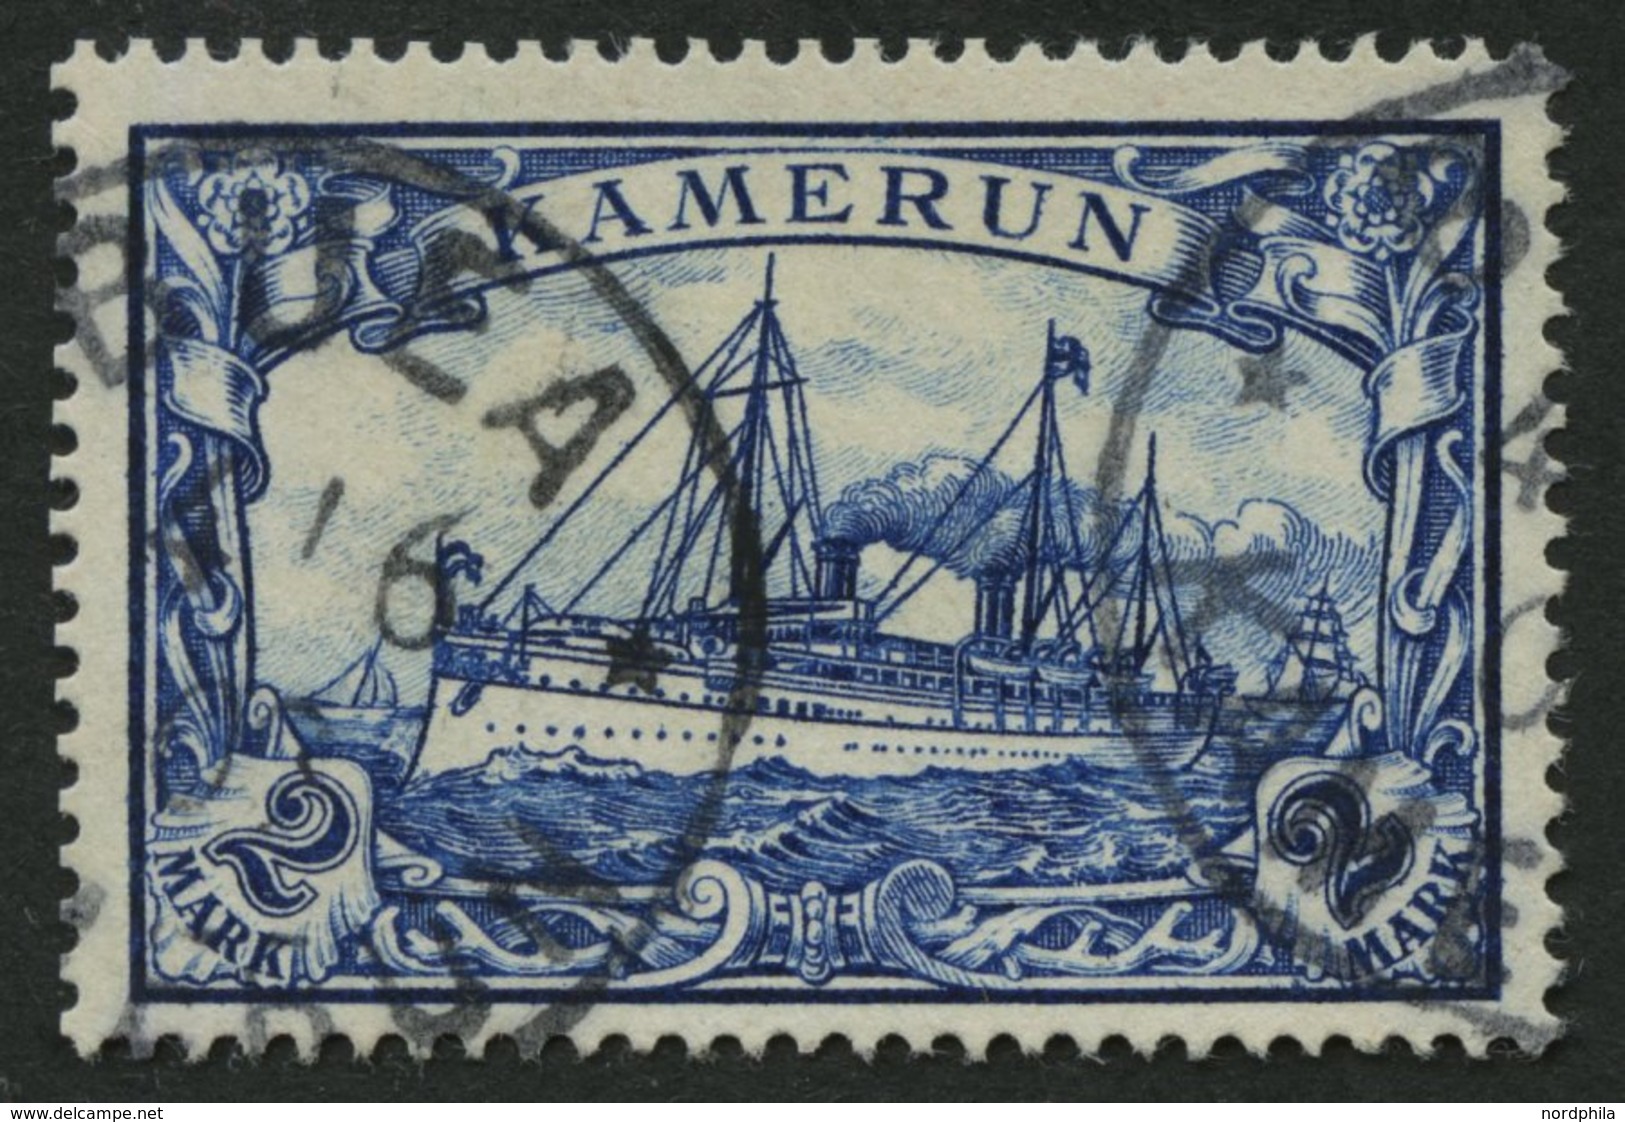 KAMERUN 17 O, 1900, 2 M. Schwärzlichblau, Pracht, Mi. 90.- - Kamerun